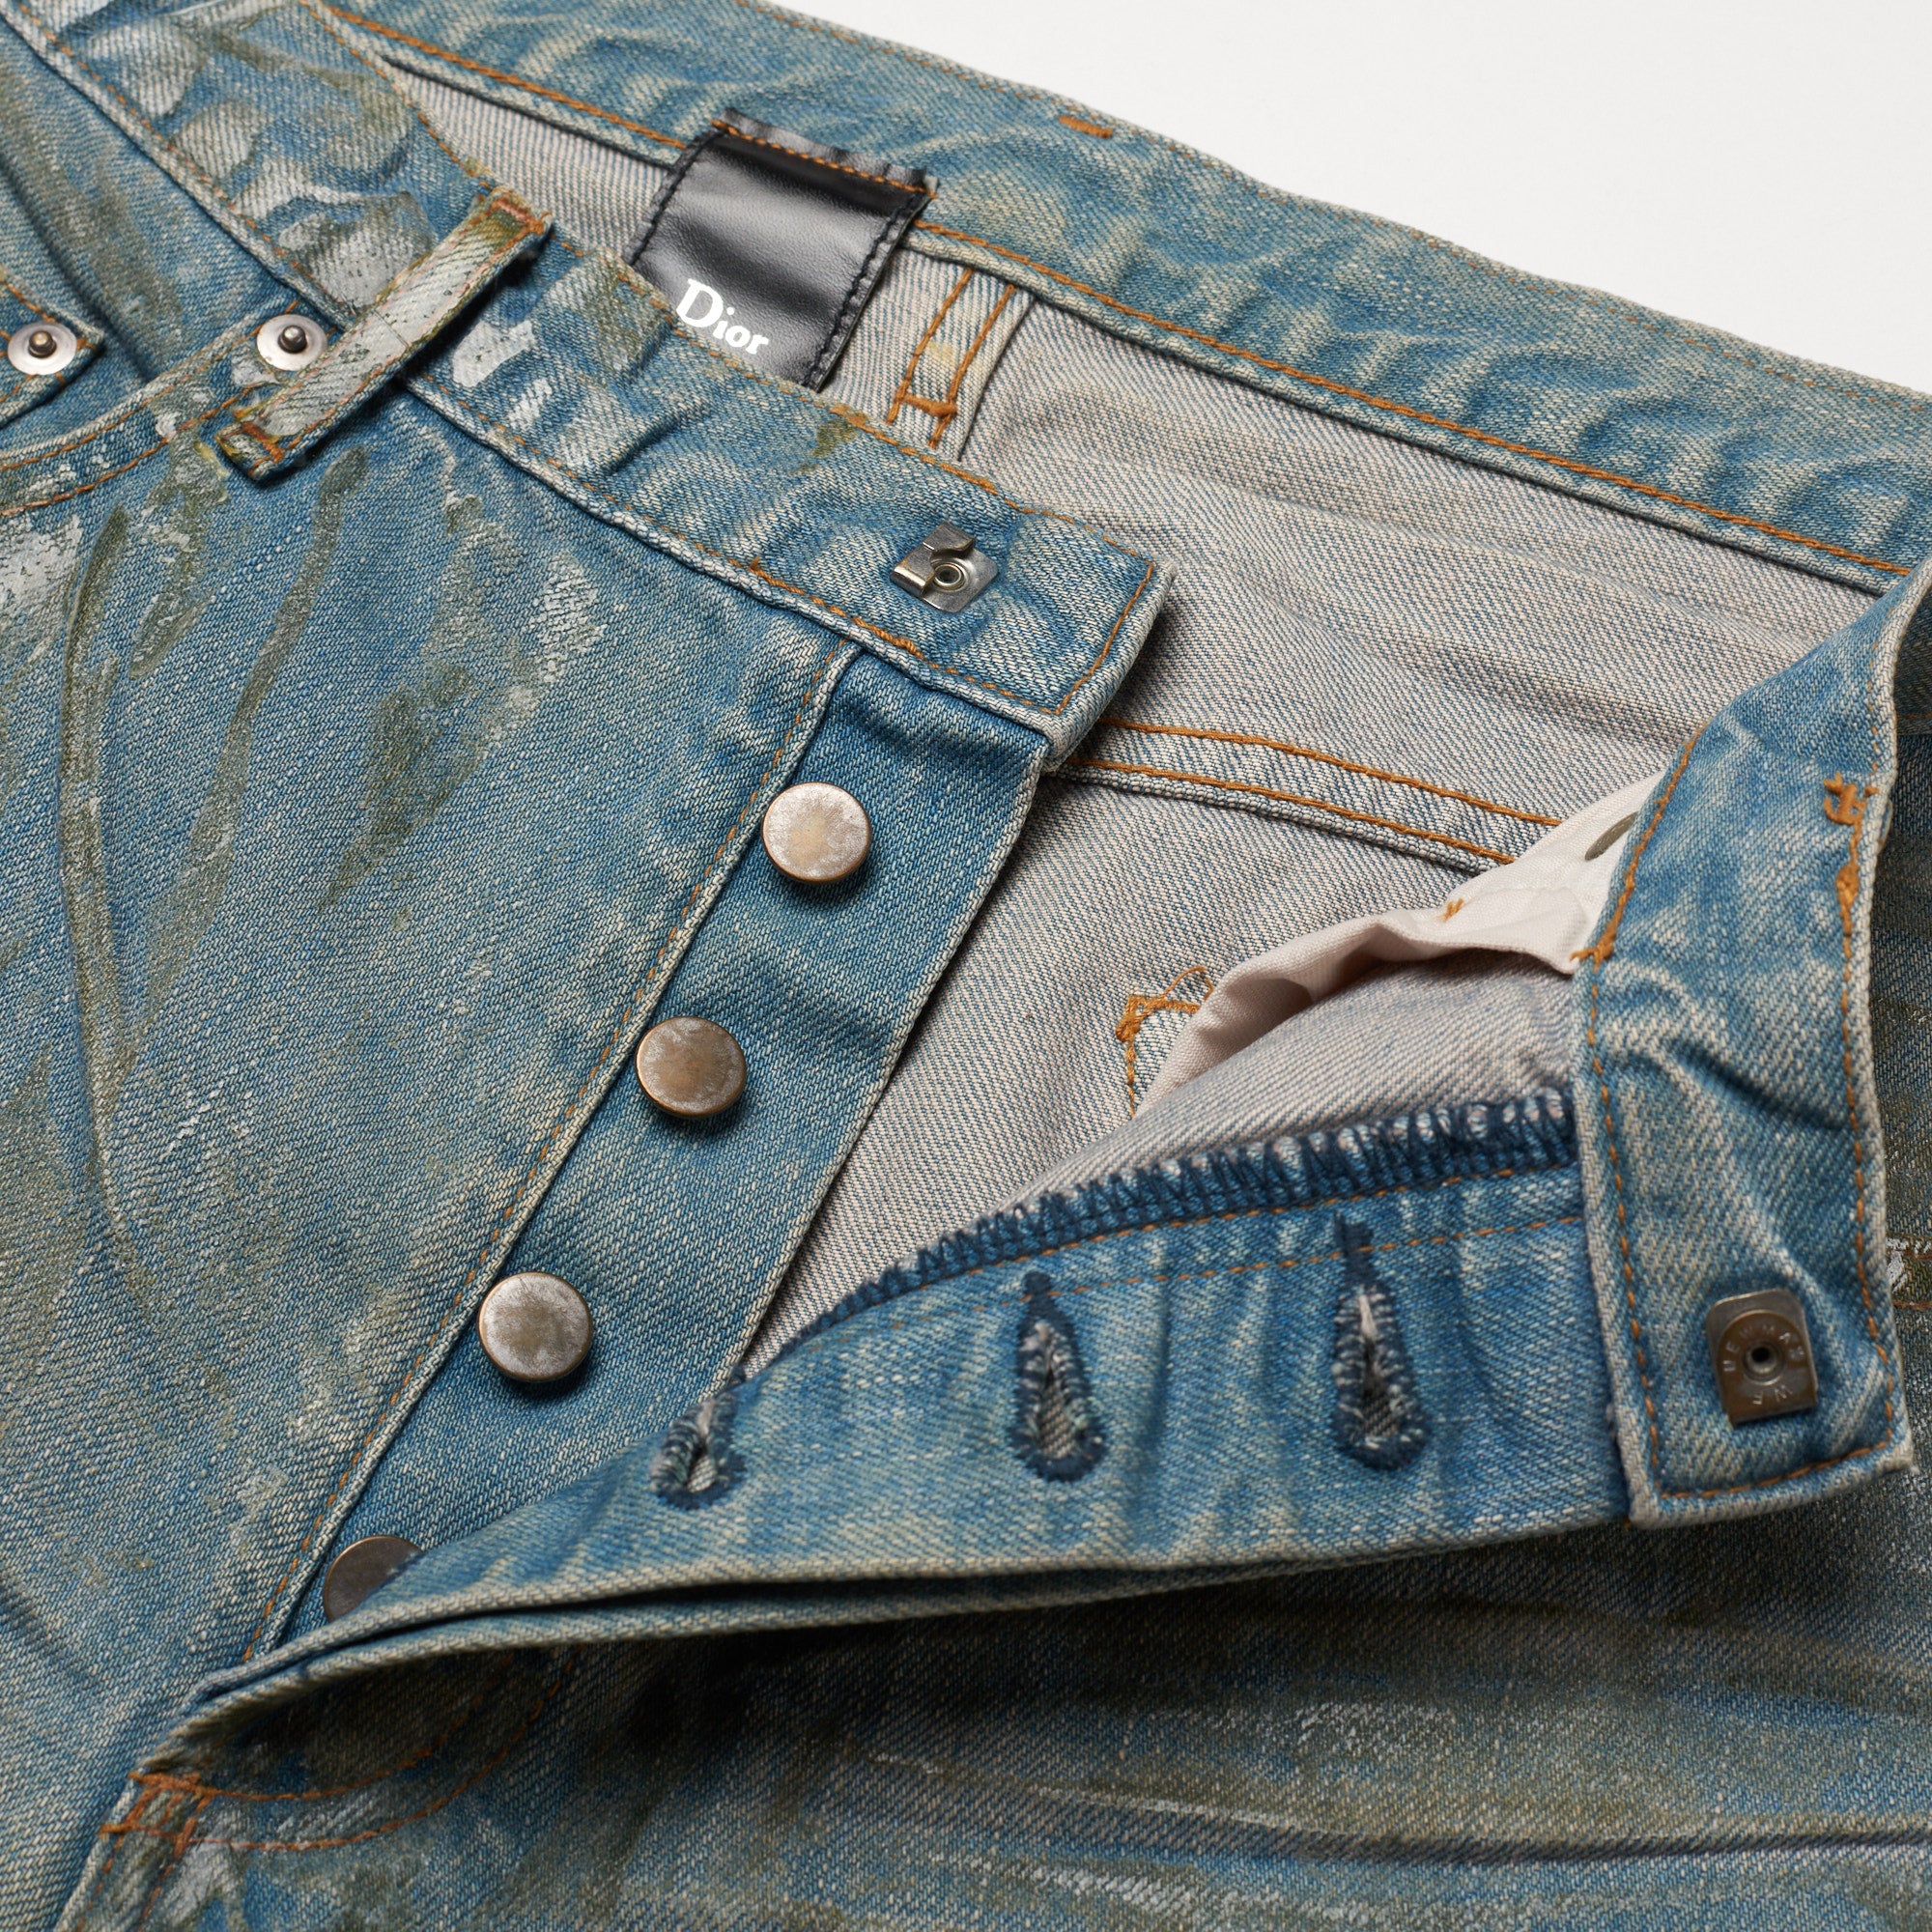 DIOR Made in Japan Wax Coated Hedi Slimane Clawmark 2003 Denim Jeans US 34